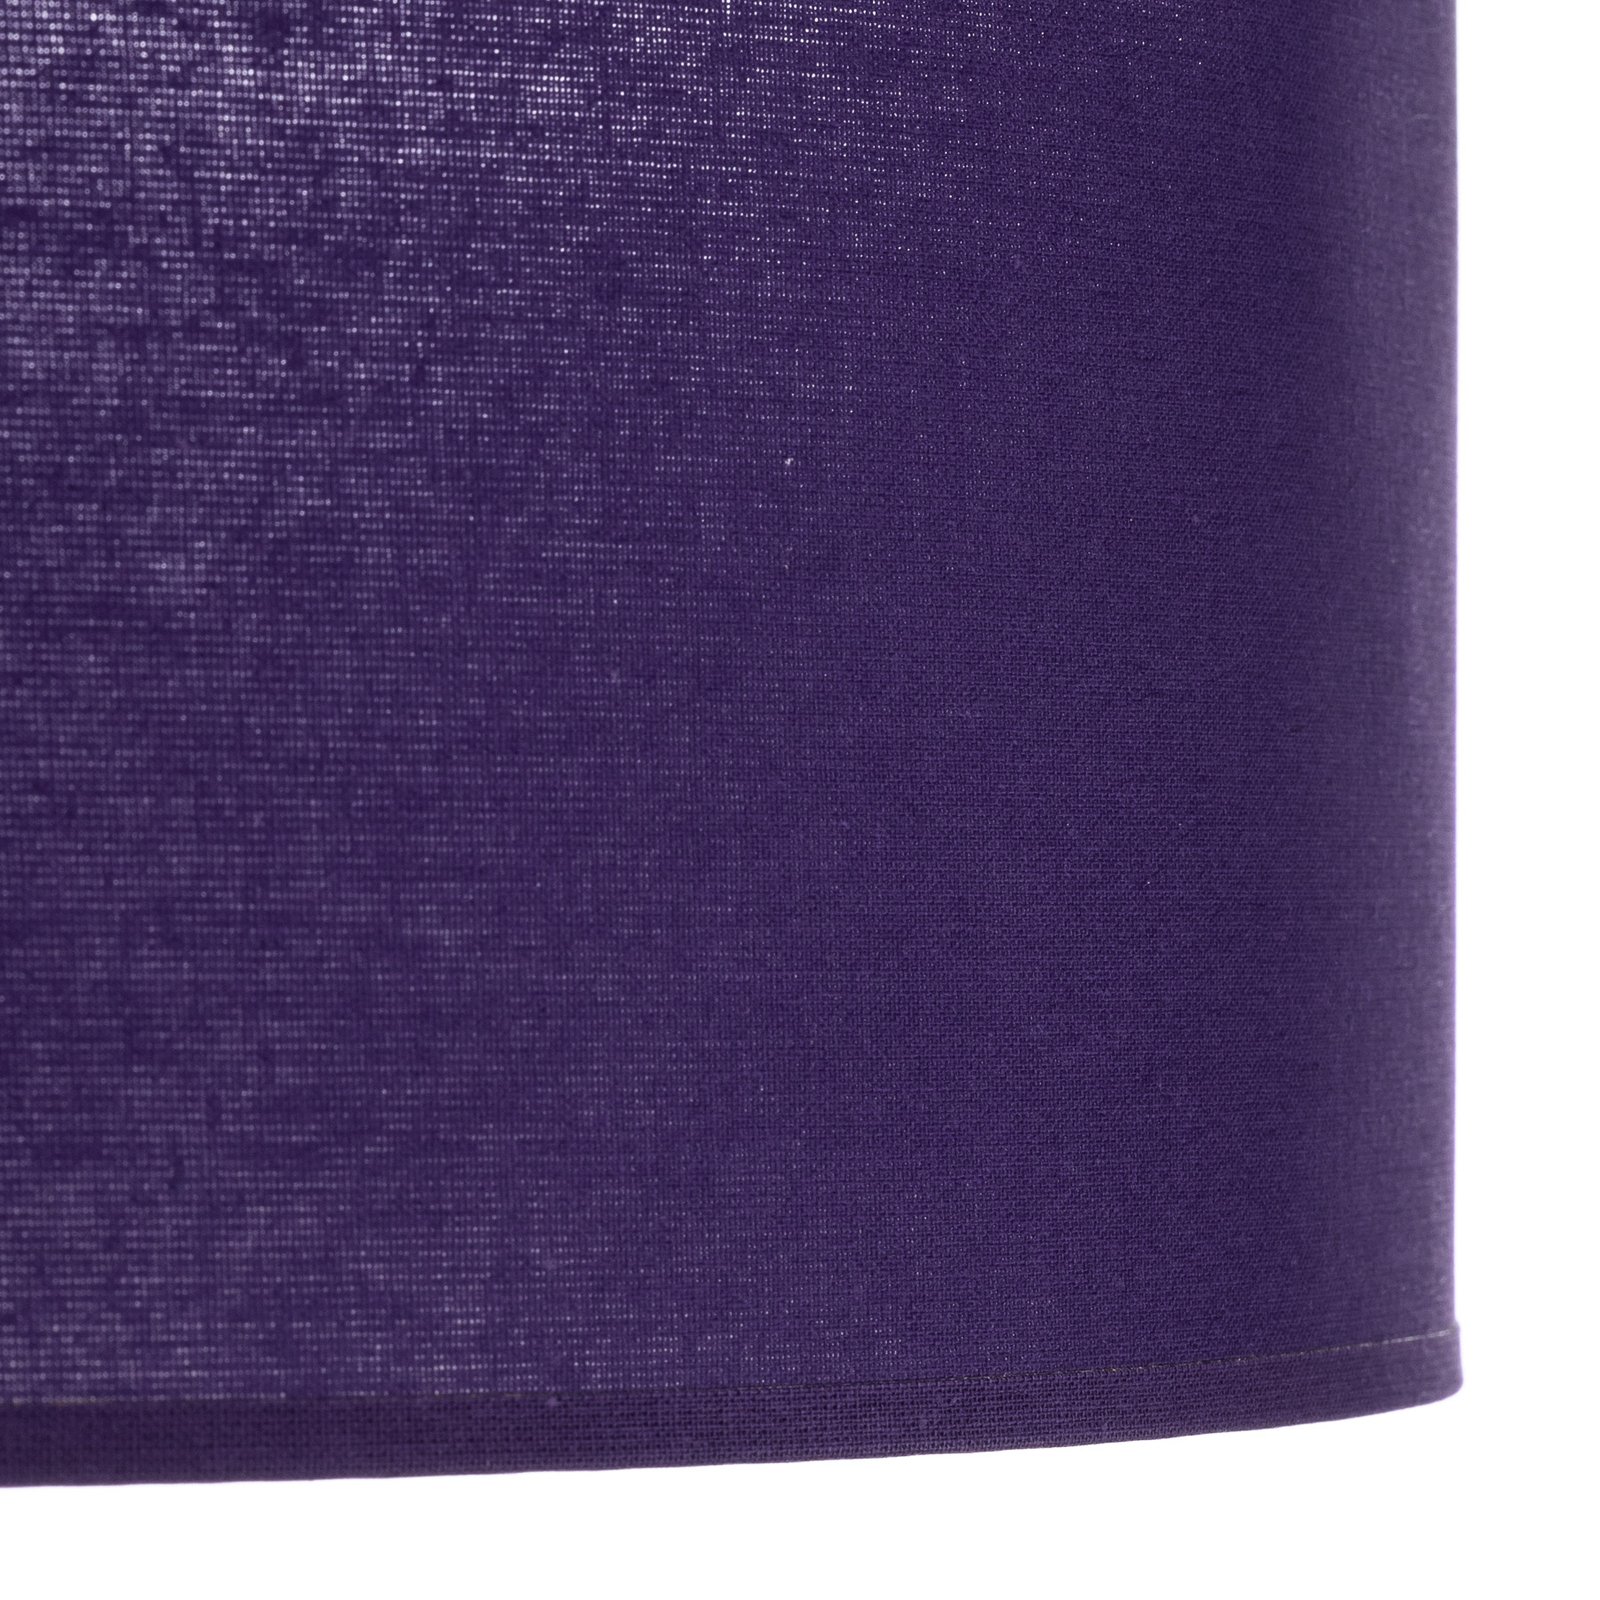 Euluna deka na kolieskach, látkový odtieň fialová, Ø 50 cm